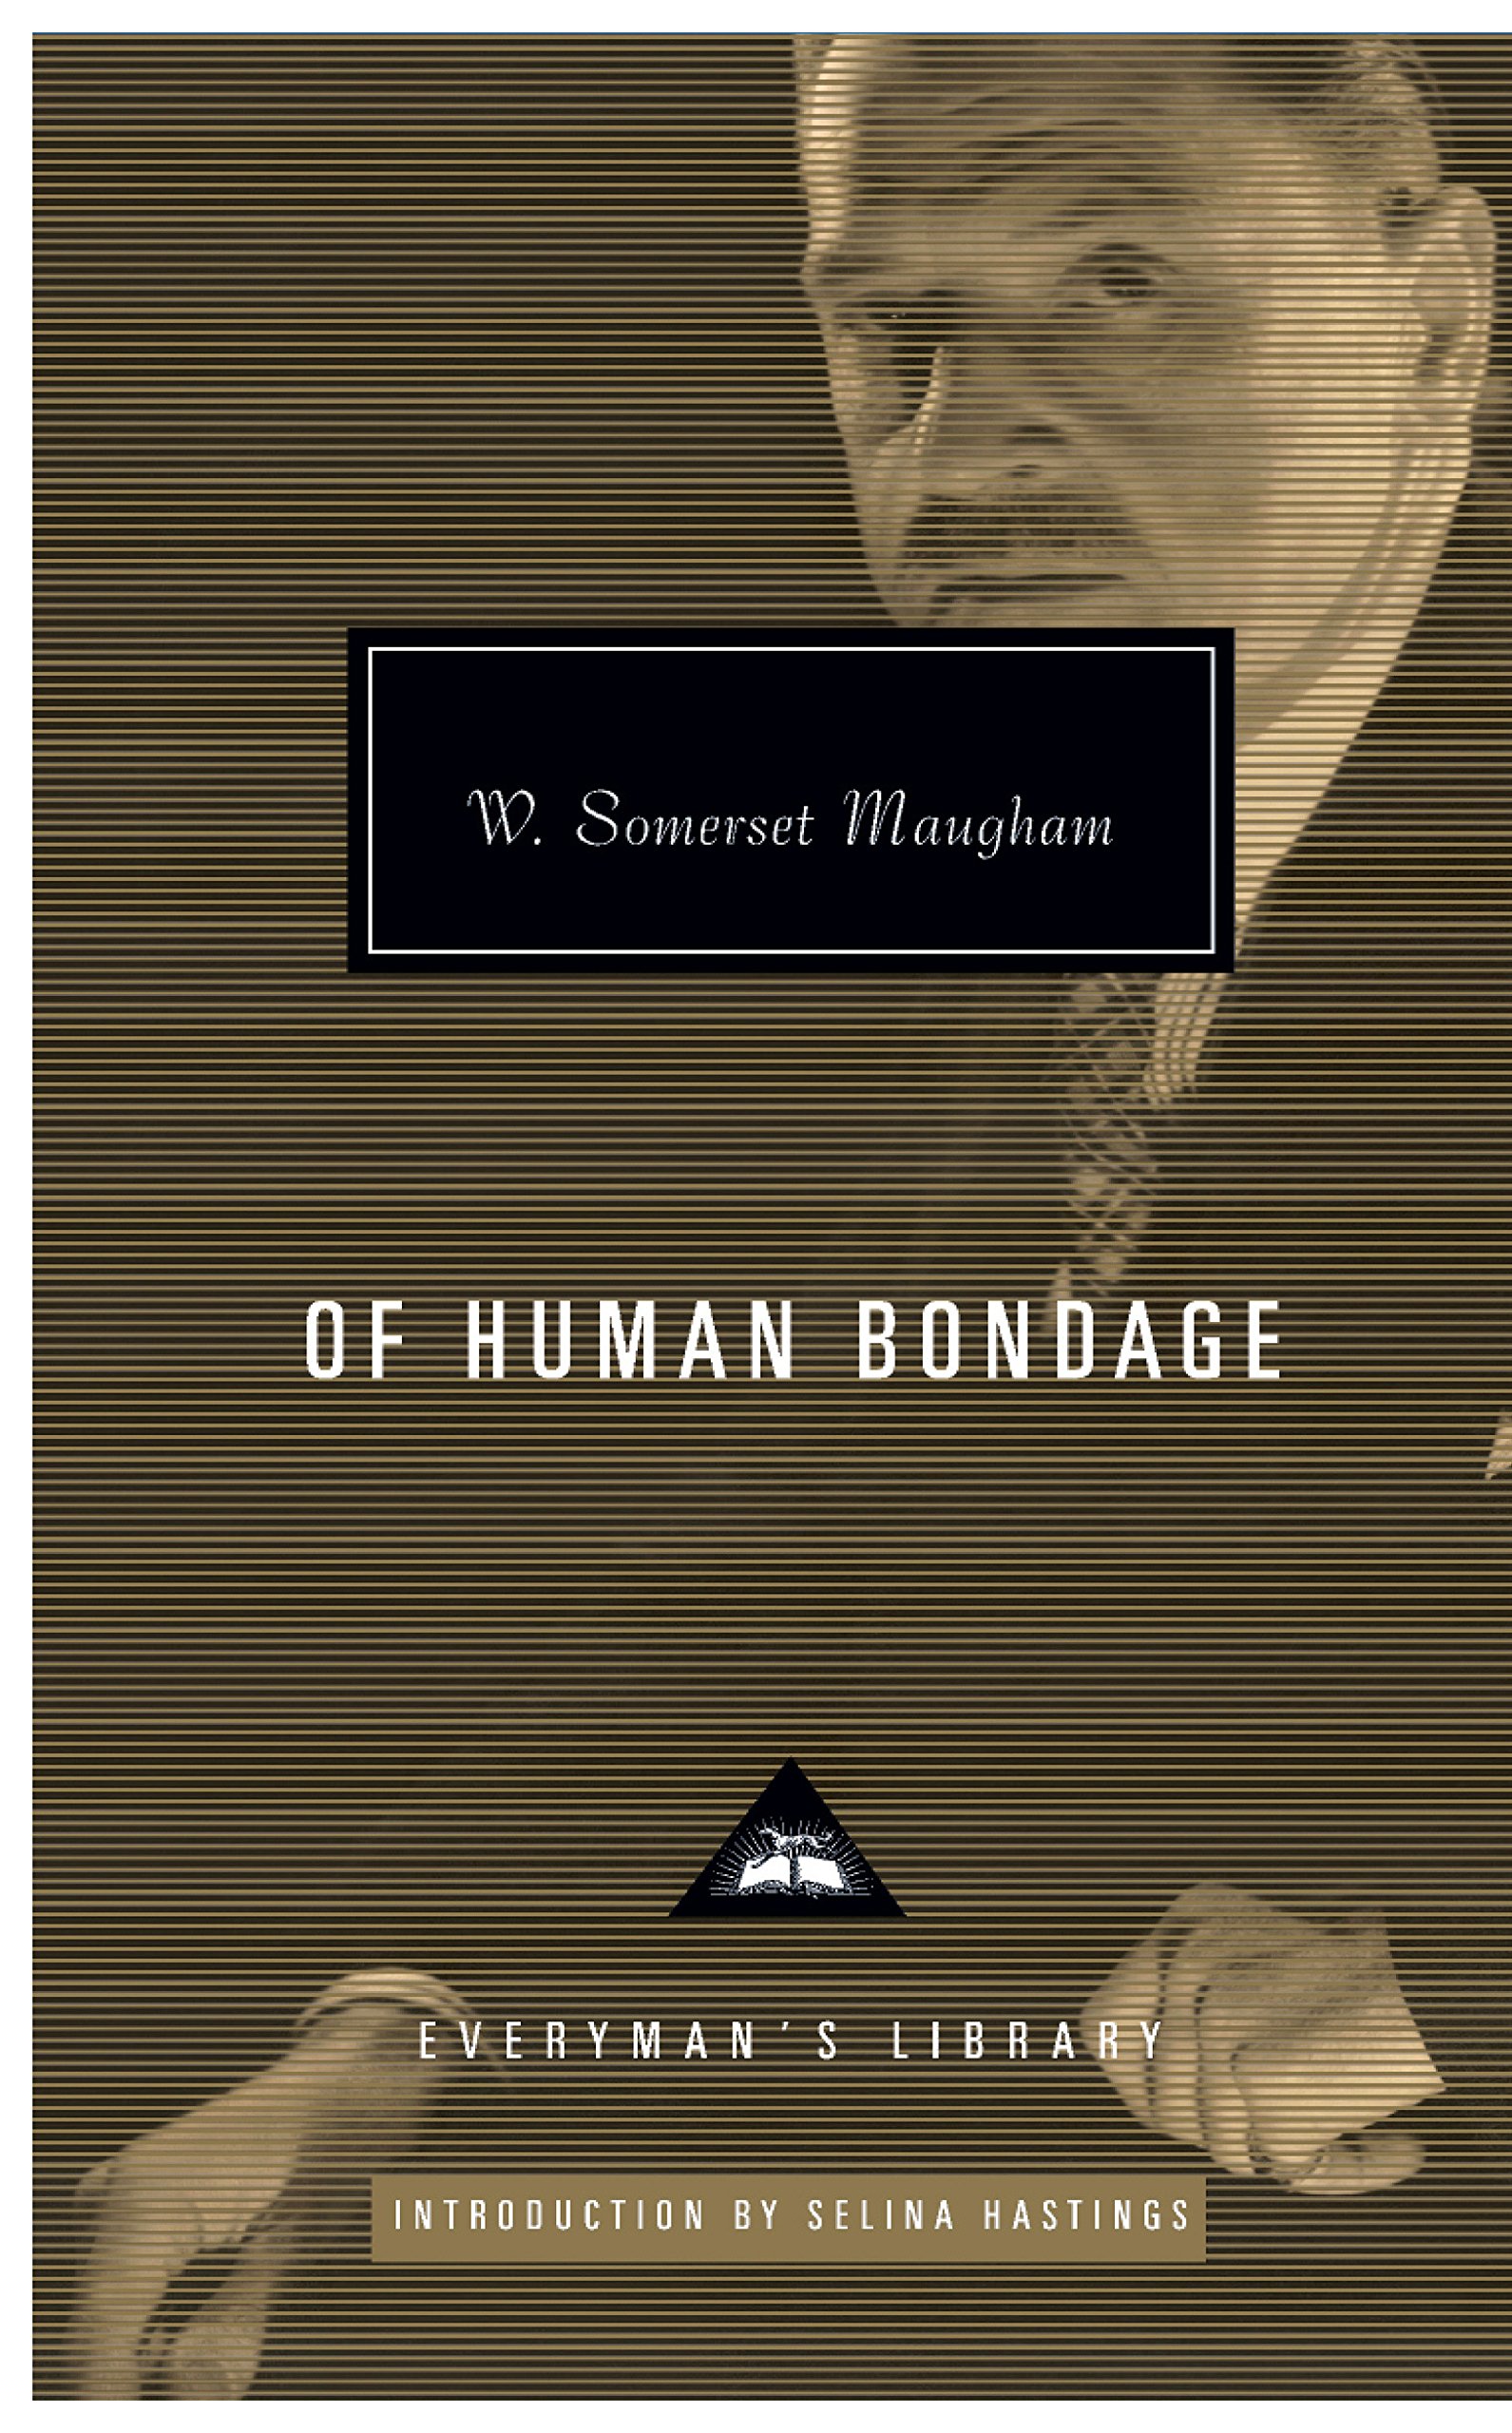 Of Human Bondage by W. Somerset Maugham